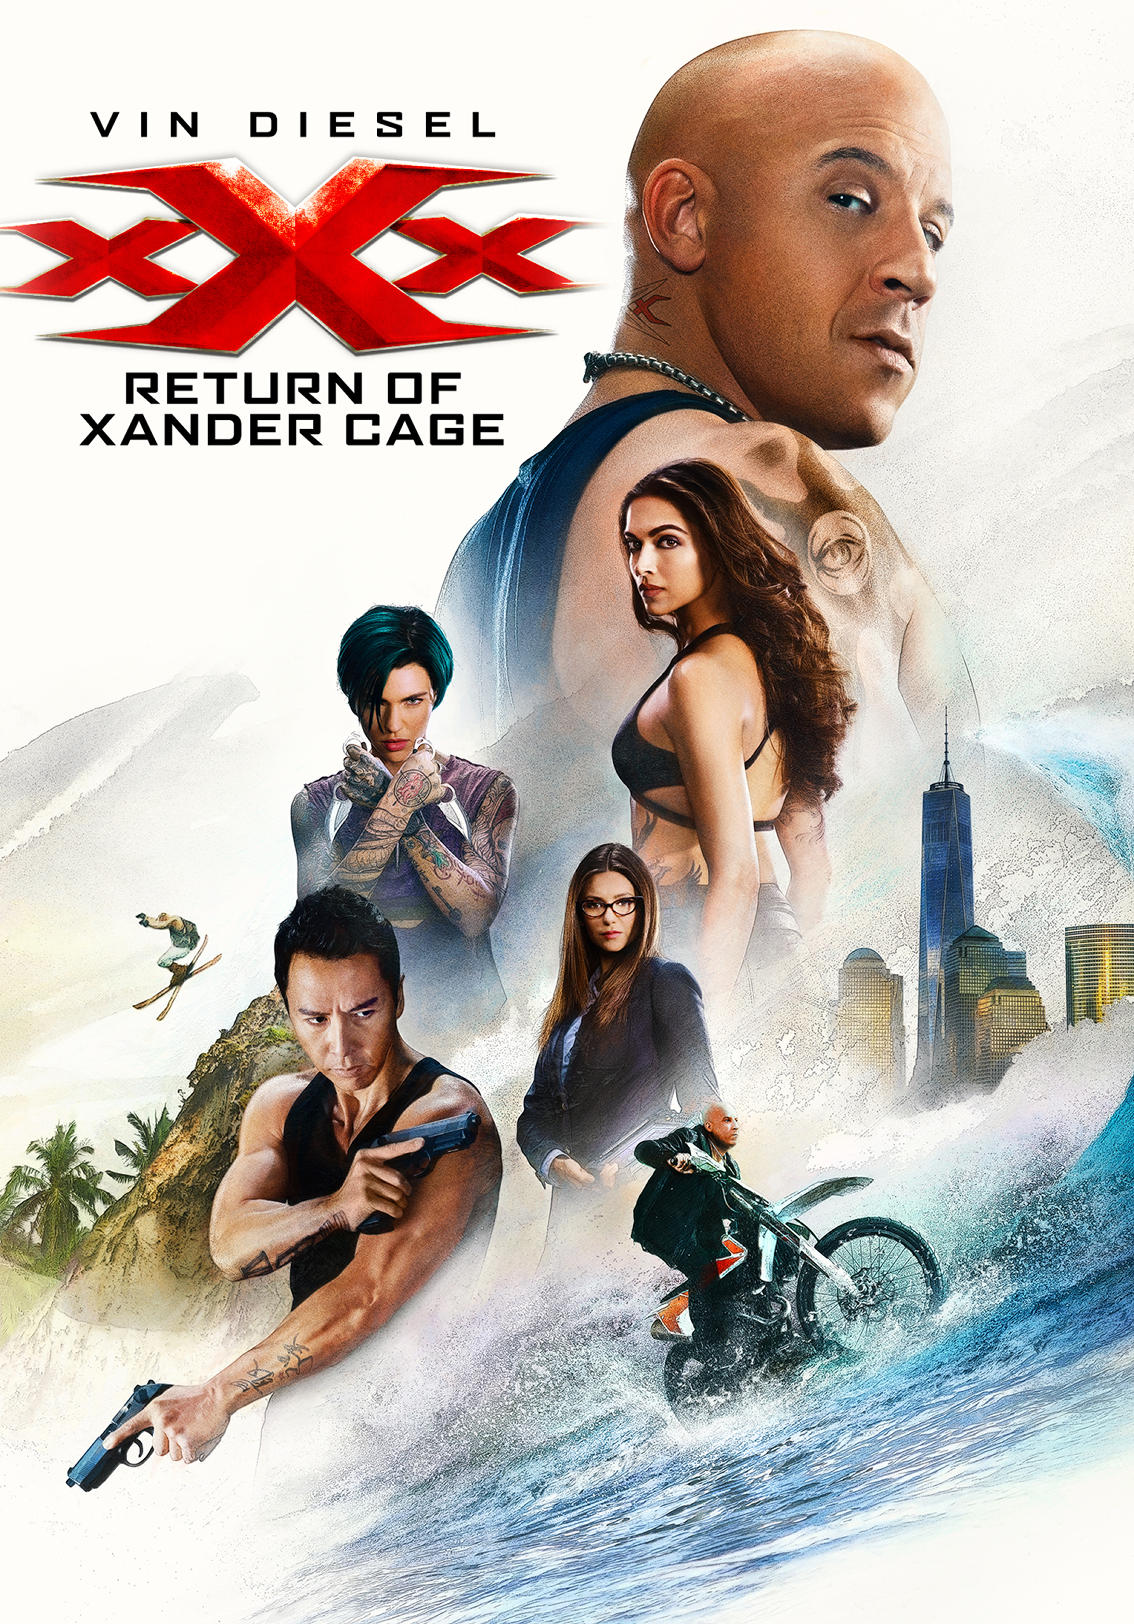 xxx return of xander cage